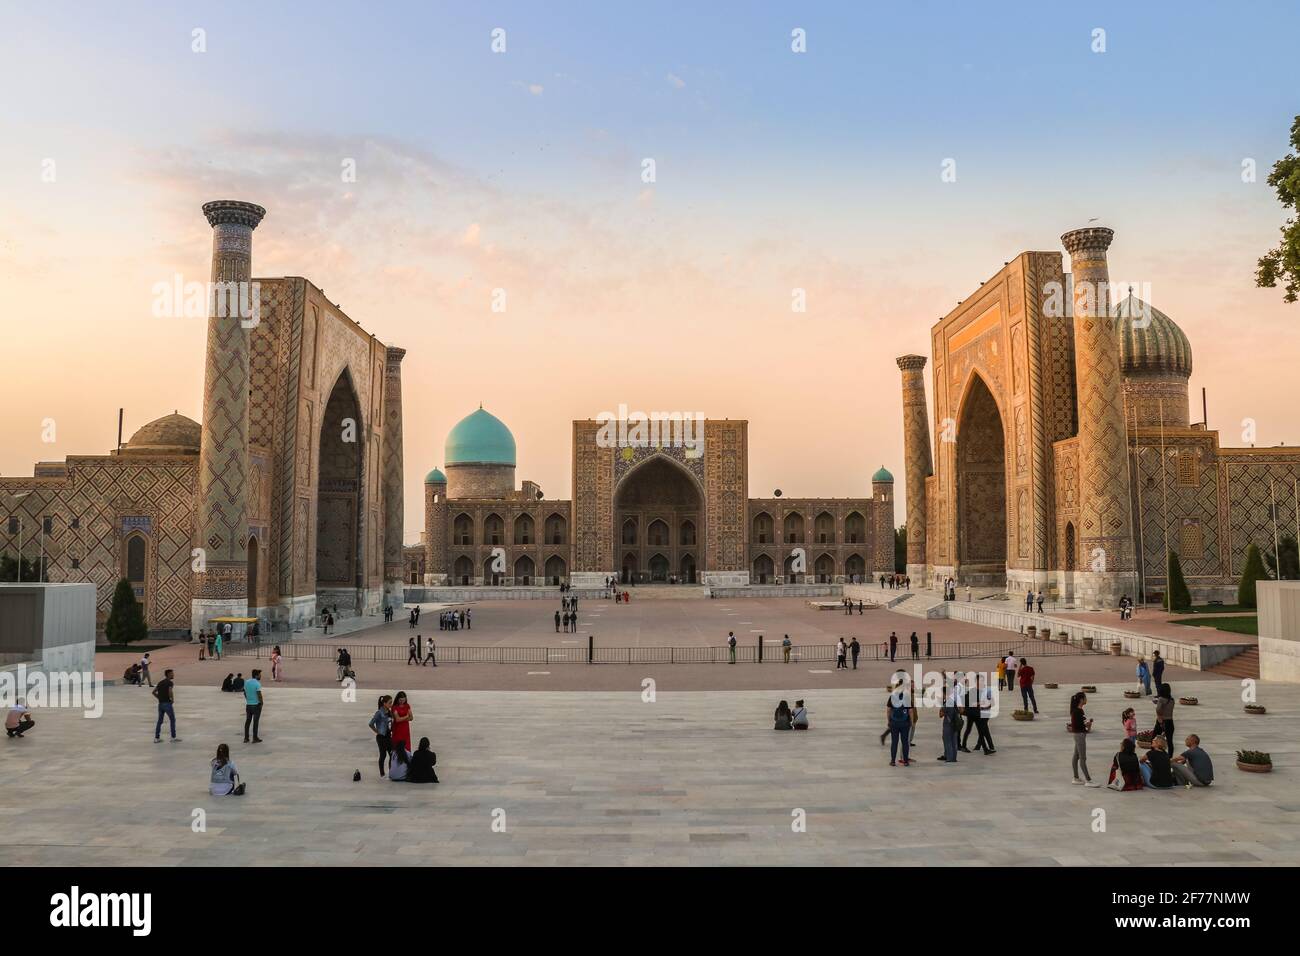 The beautiful city of Samarkand, Uzbekistan Stock Photo